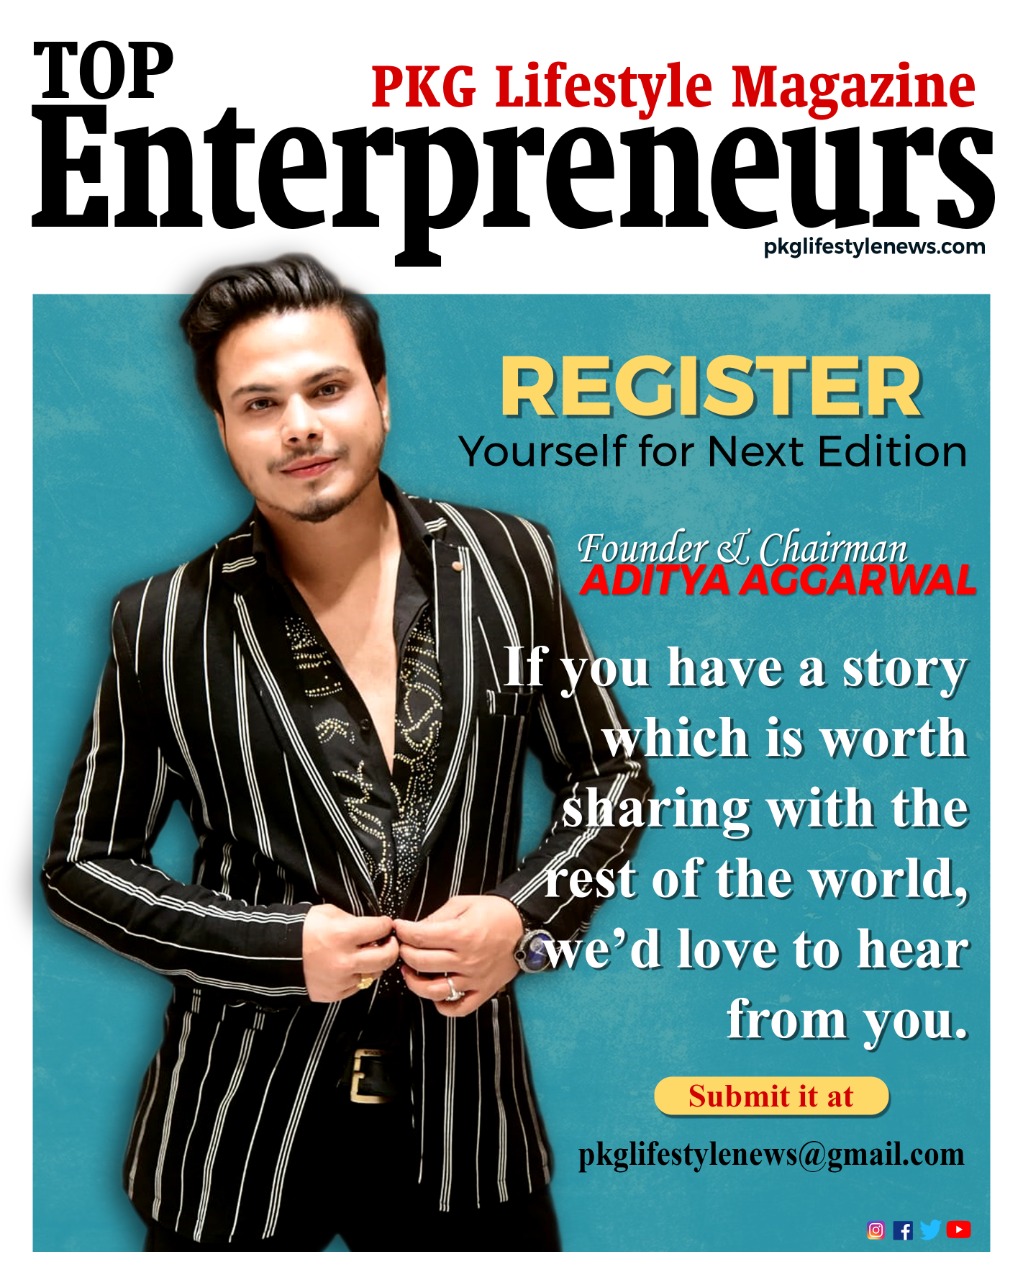 Aditya Aggarwal on PKG lifestyle News top 50 entrepreneurs magazine Coming Soon.